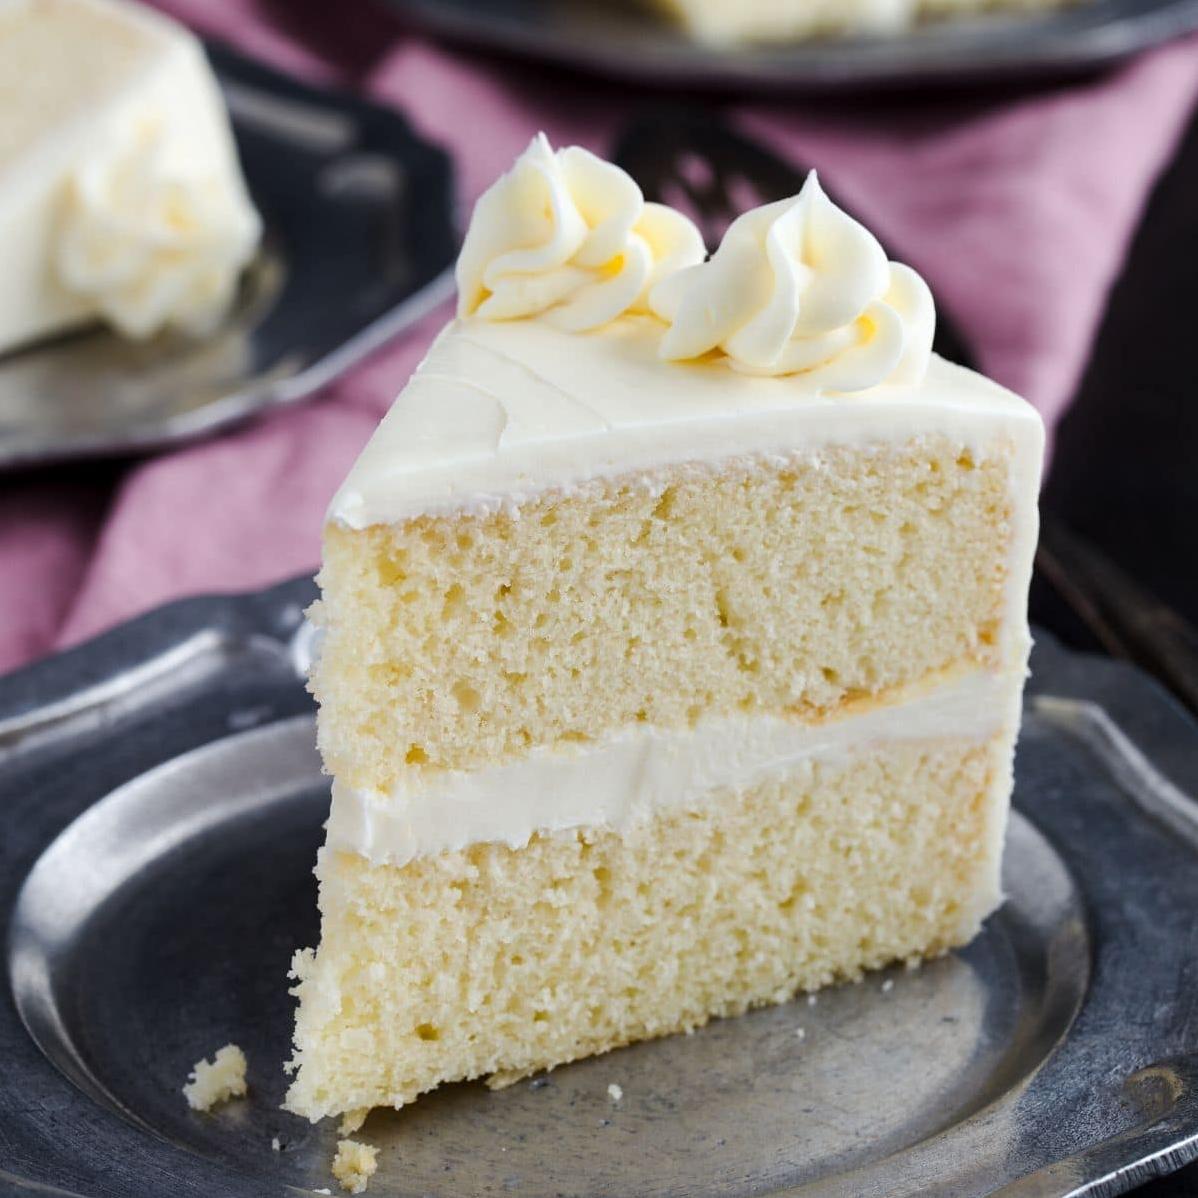 Delicious Gluten-Free Cake Recipe for Easy Baking